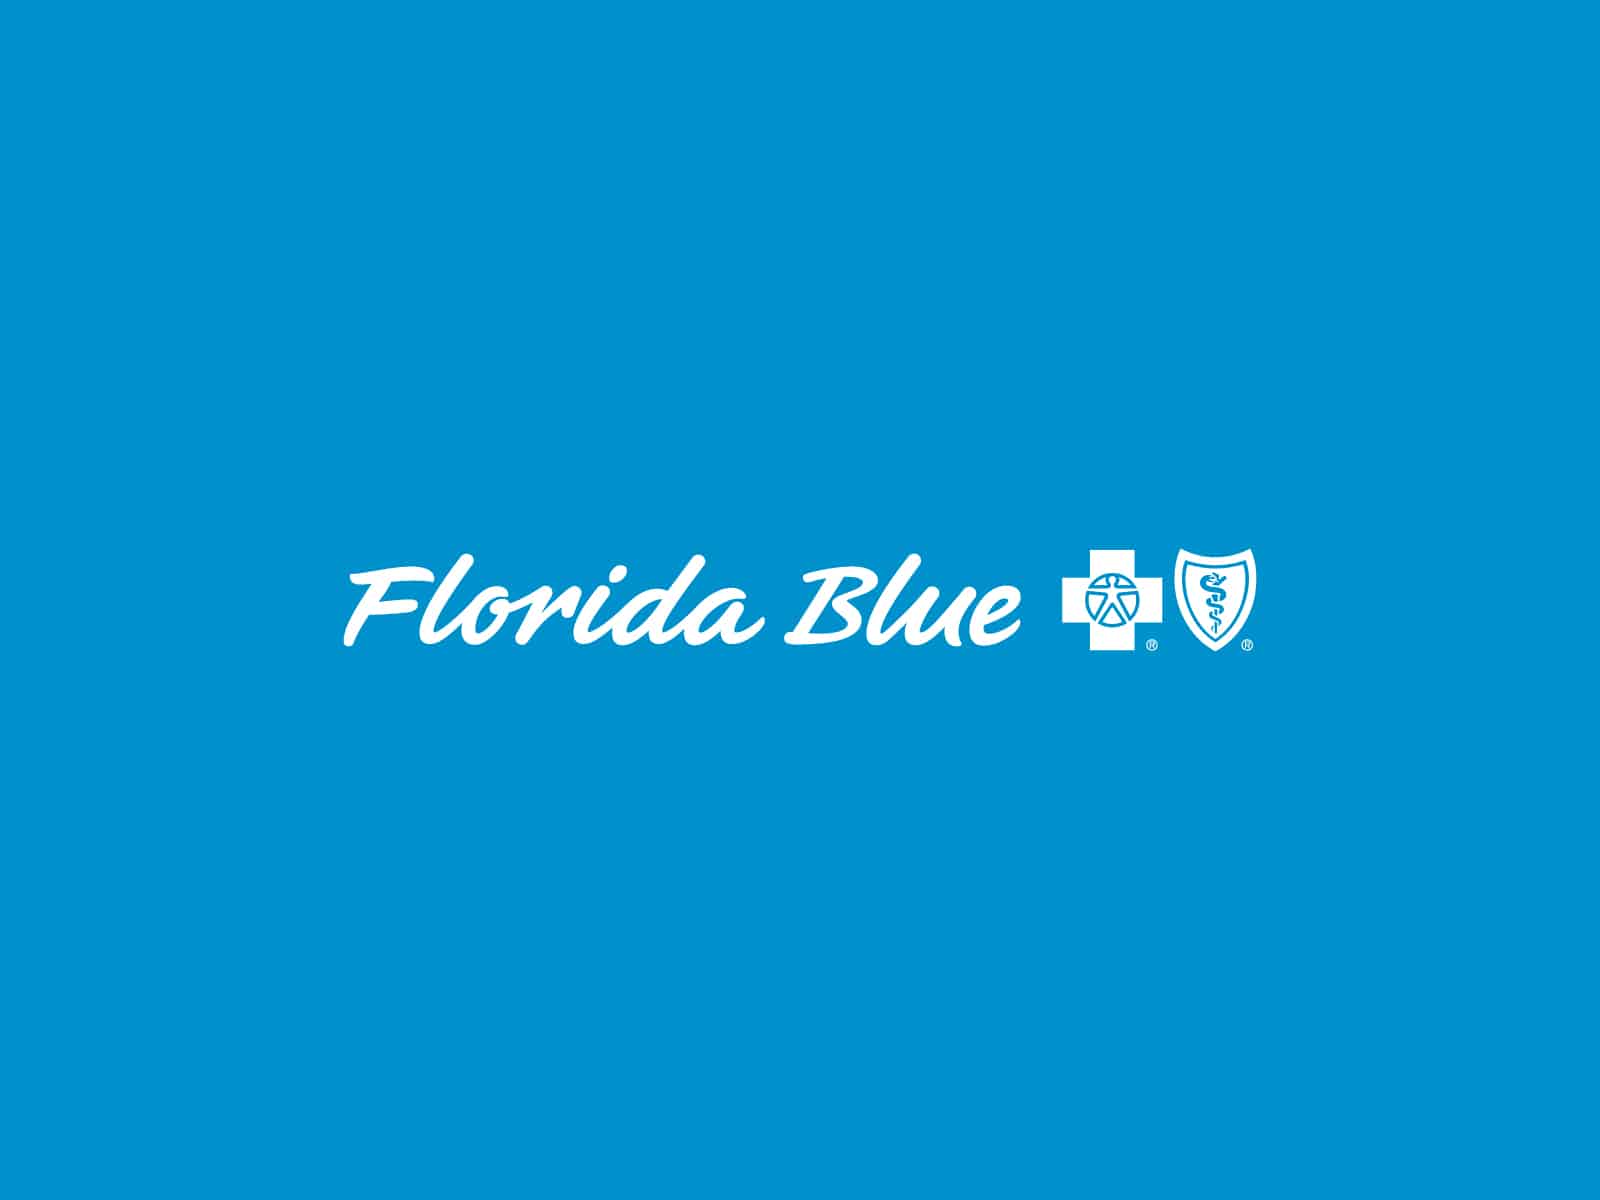 Update on Florida Blue CFMGMA